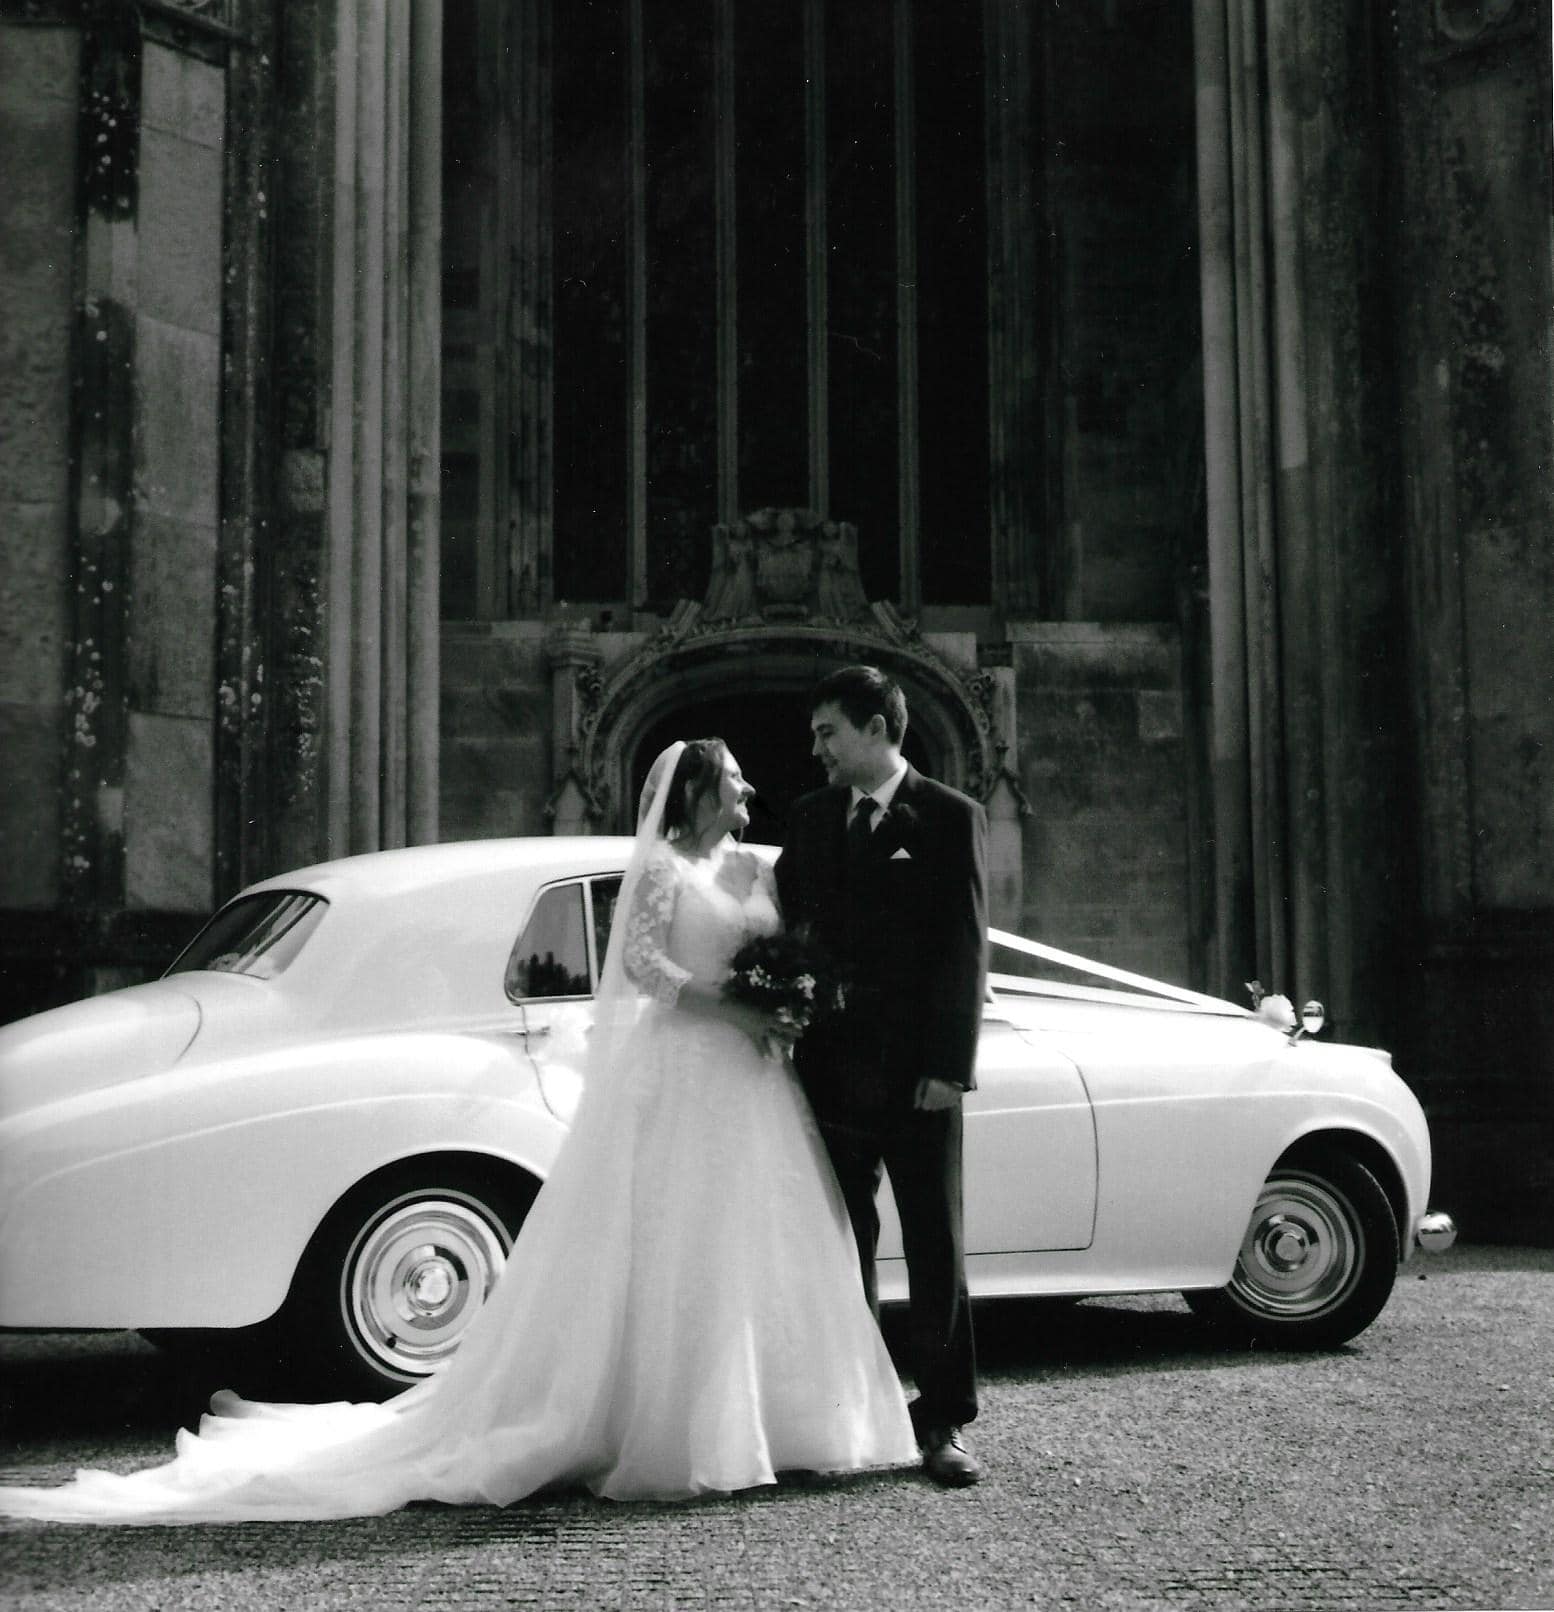 Wedding shot on Illford film